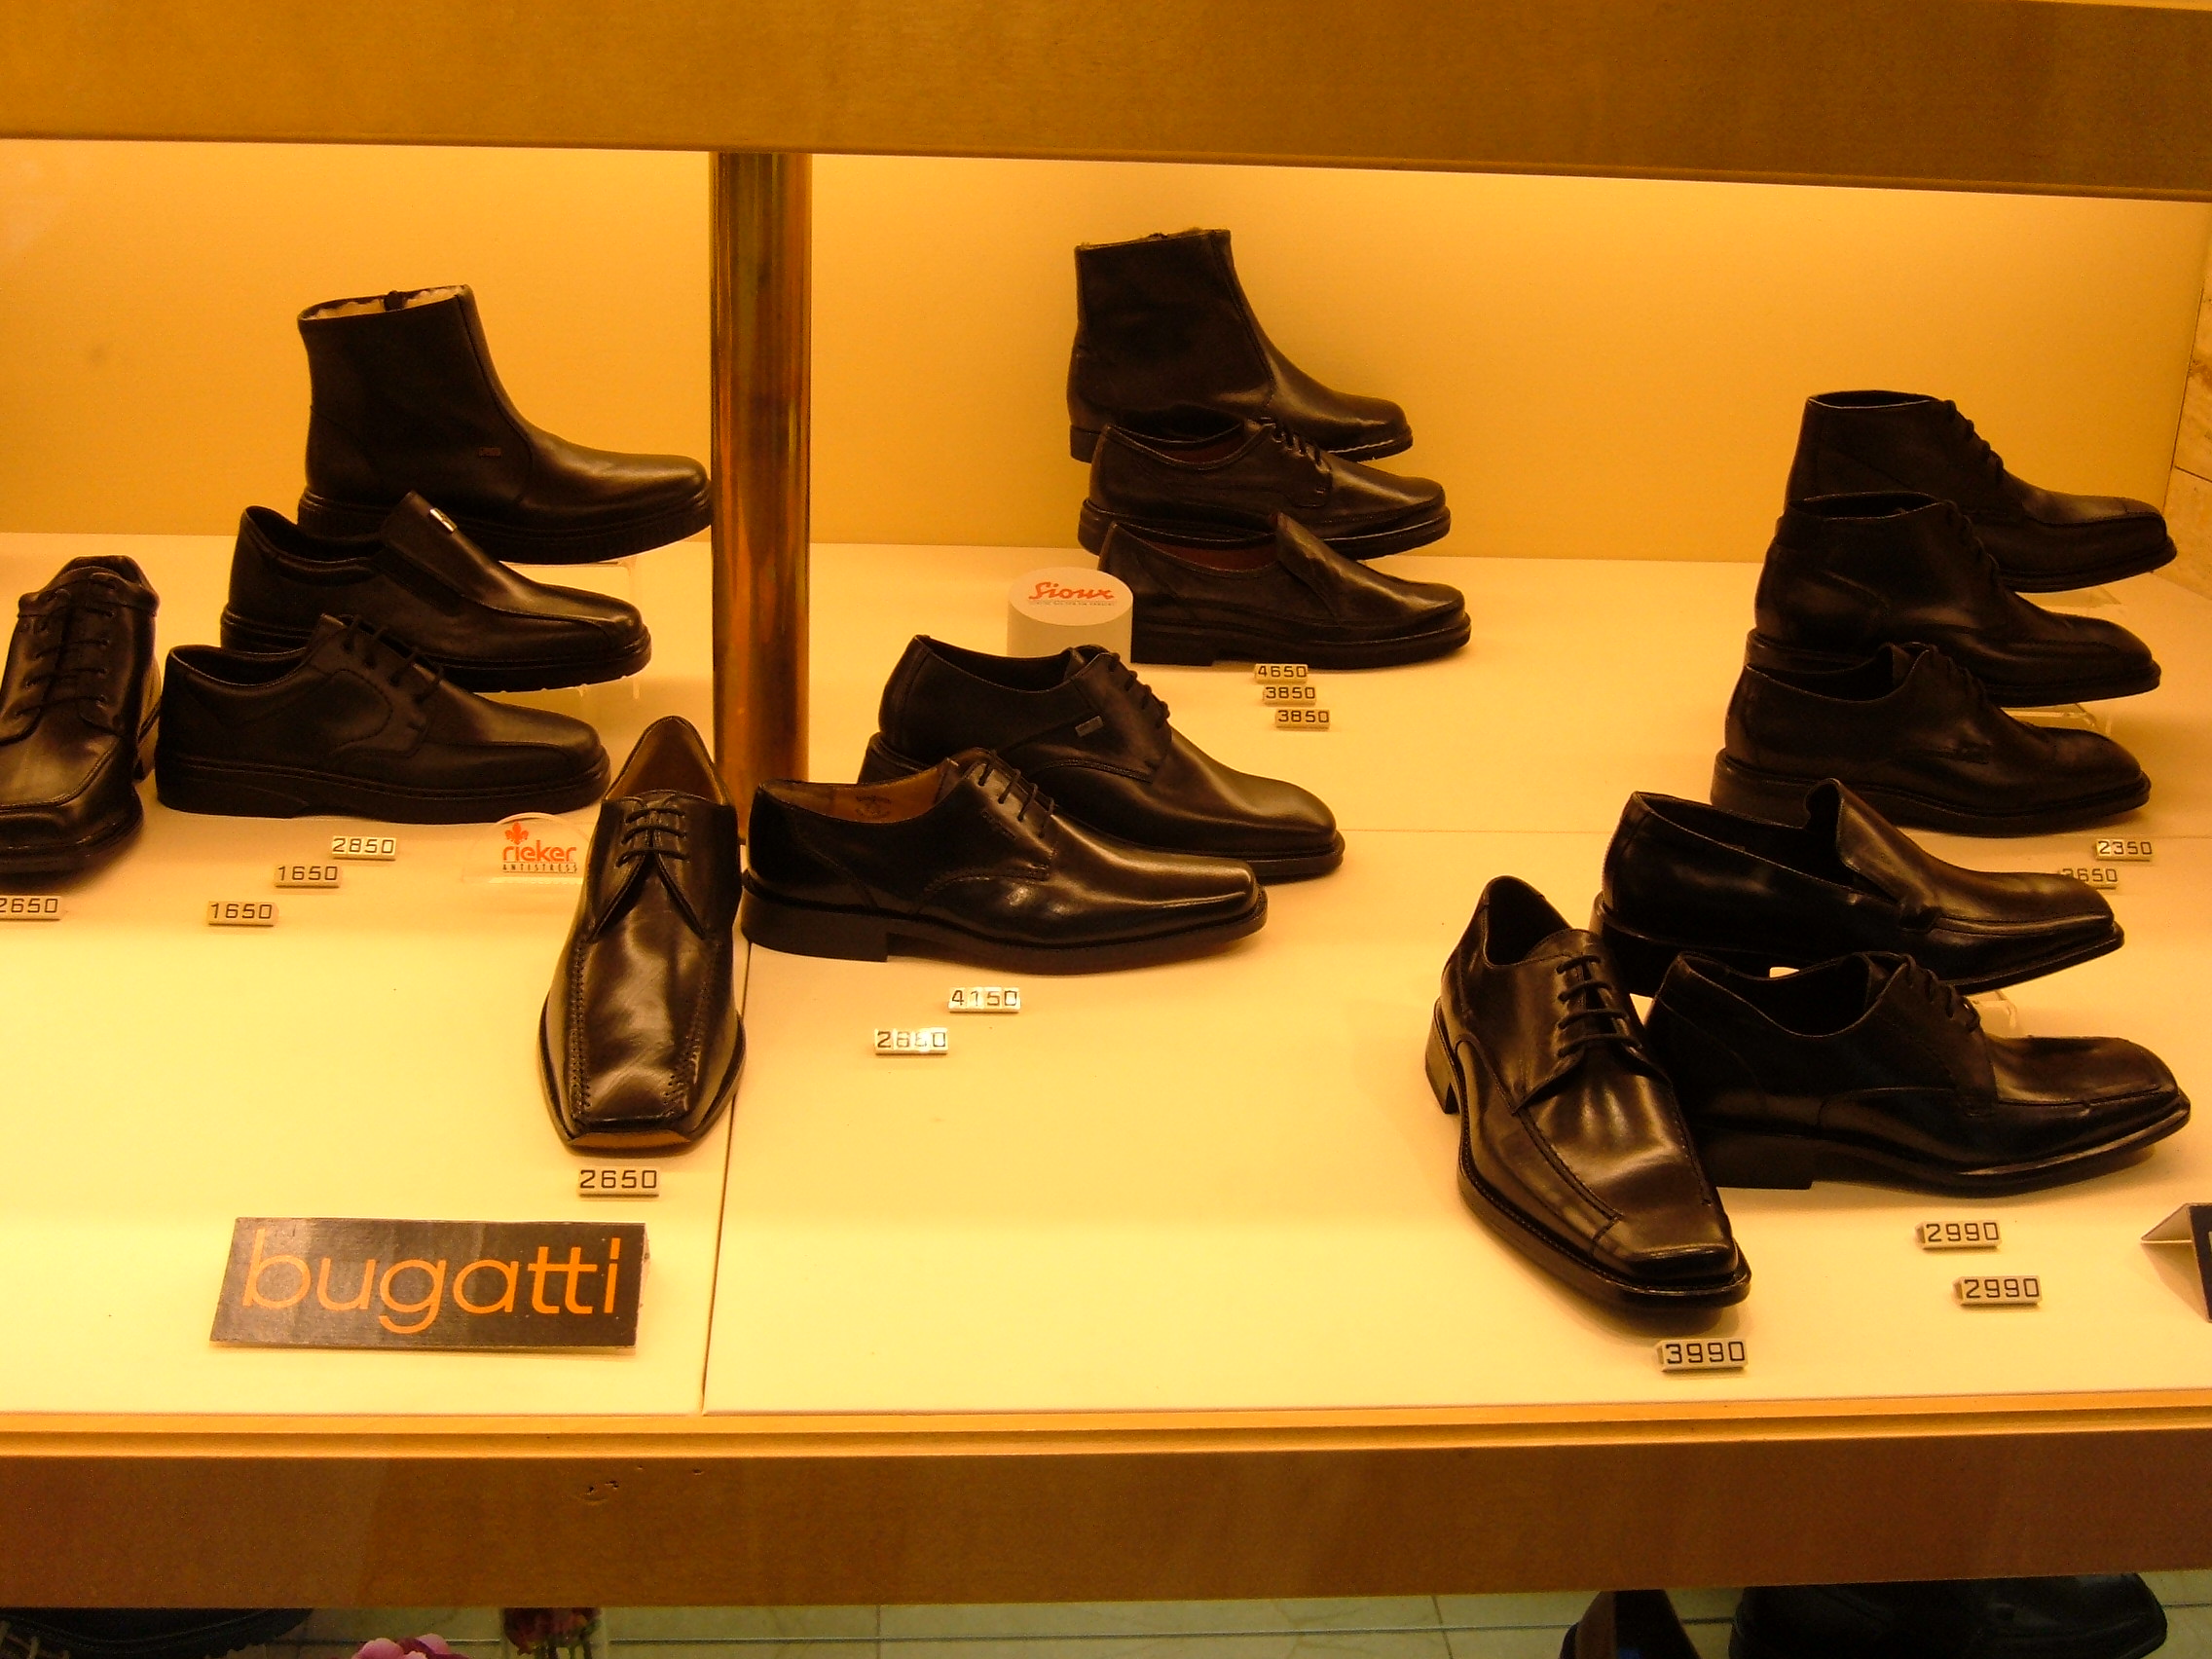 Bugatti shoes on display, Prague